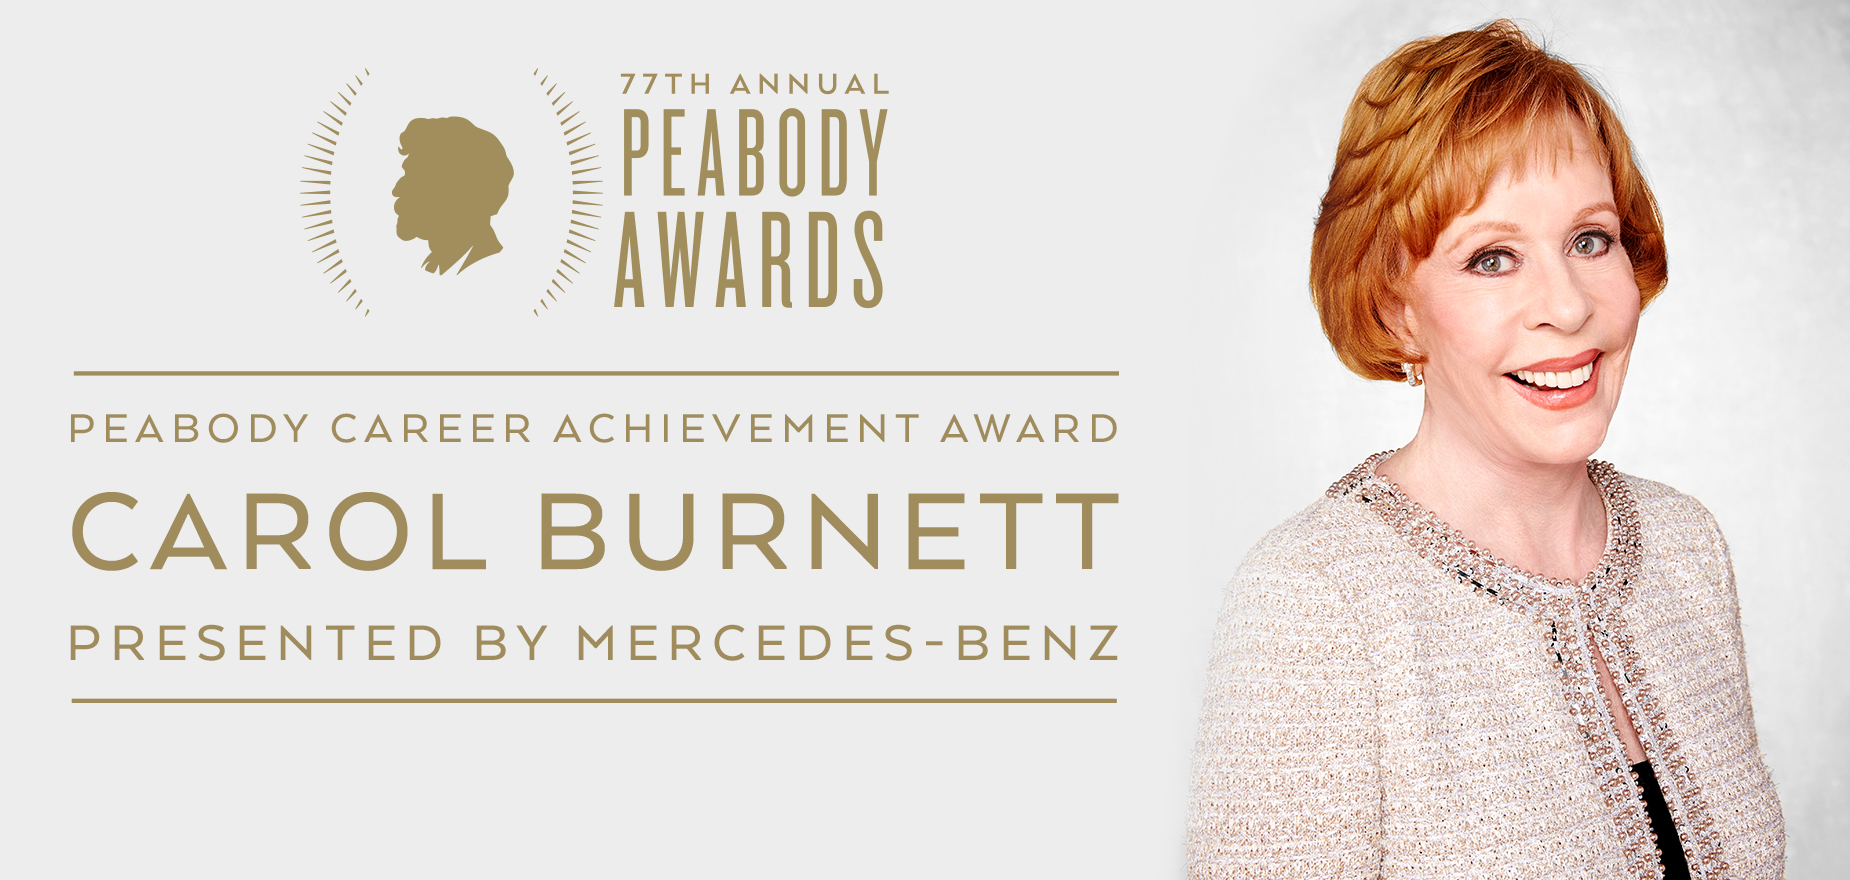 Career Achievement Award: Carol Burnett, presented by Mercedes-Benz